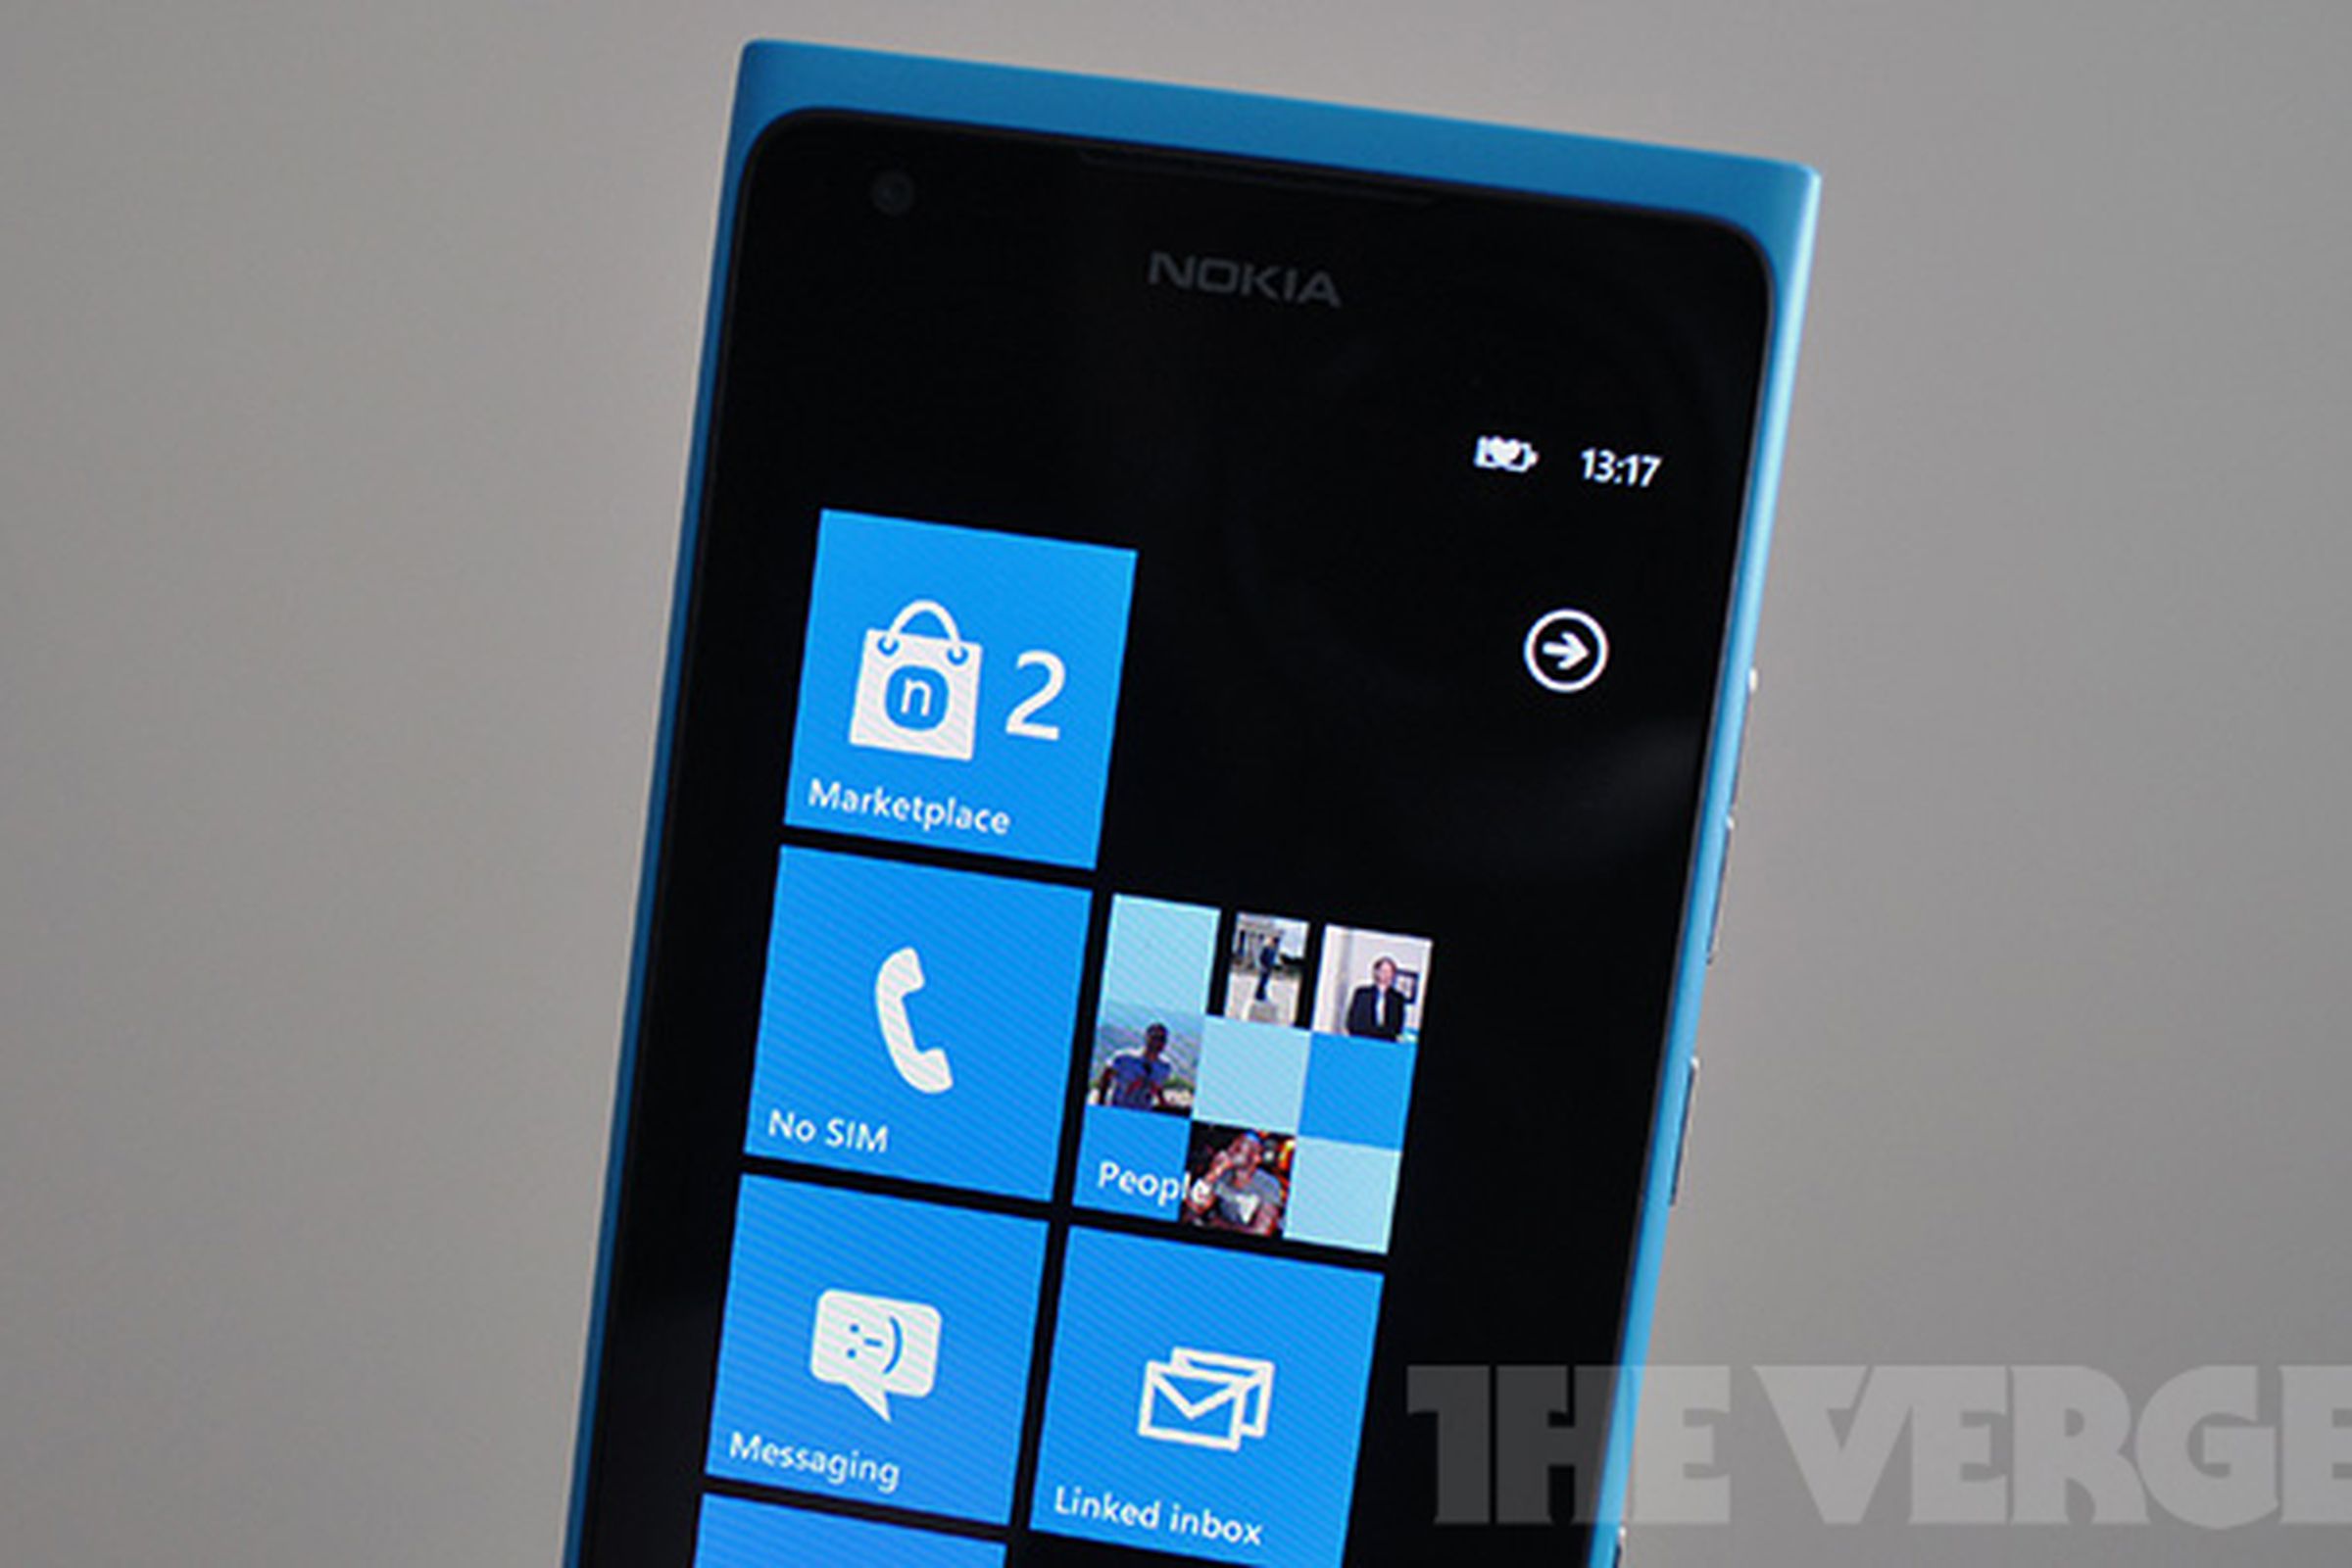 Nokia Lumia 900 marketplace branding